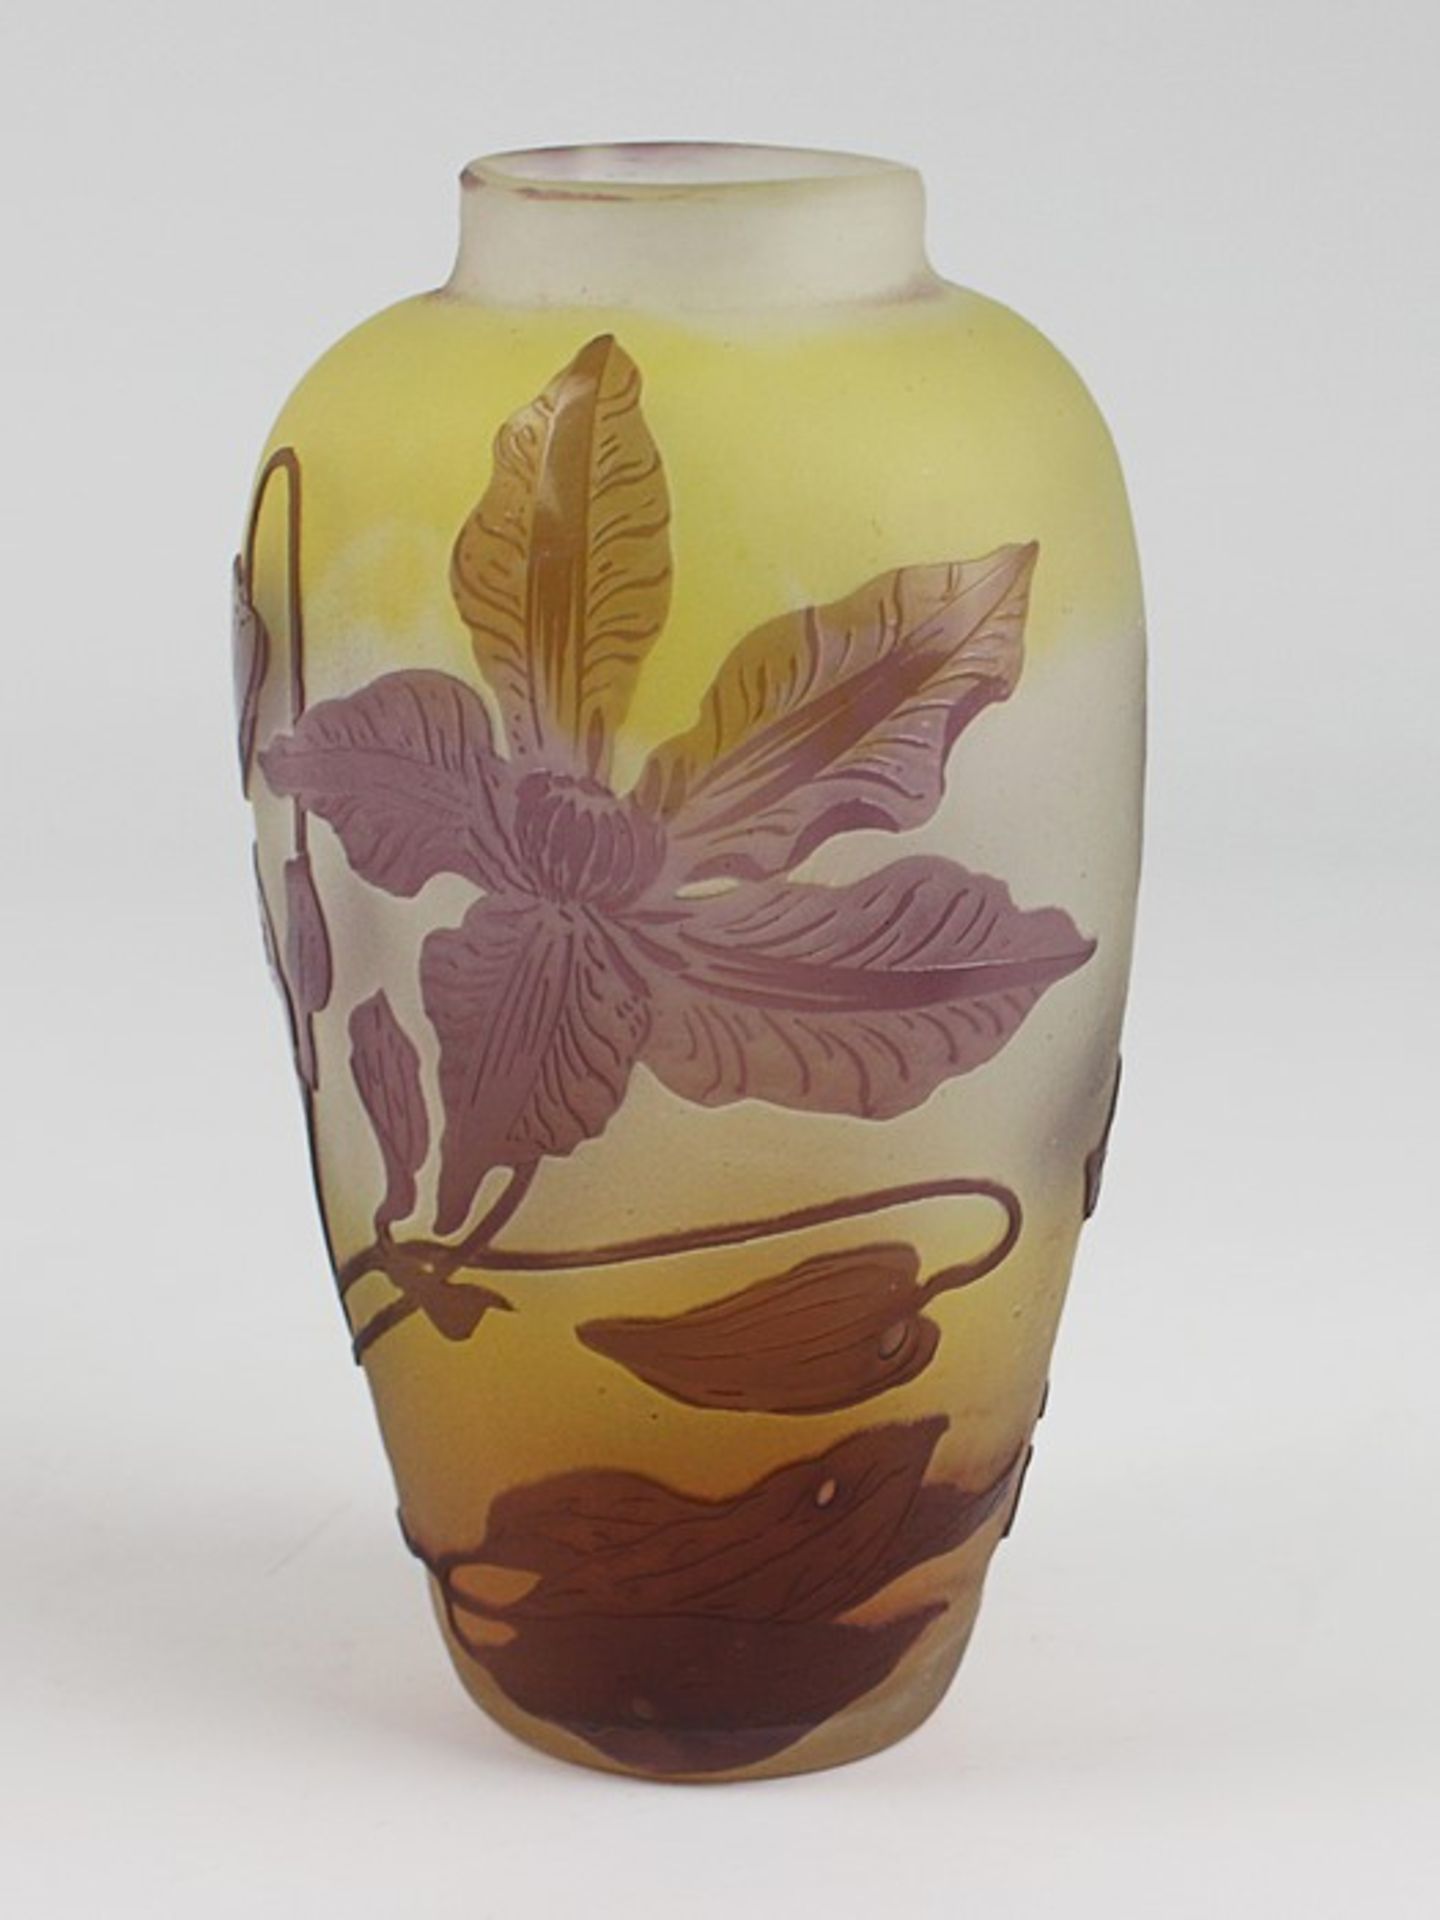 Gallé - Vase1920, Jugendstil, Emile Gallé, Frankreich, farbloses Glas, runder Stand, ovoider, leicht - Bild 2 aus 6